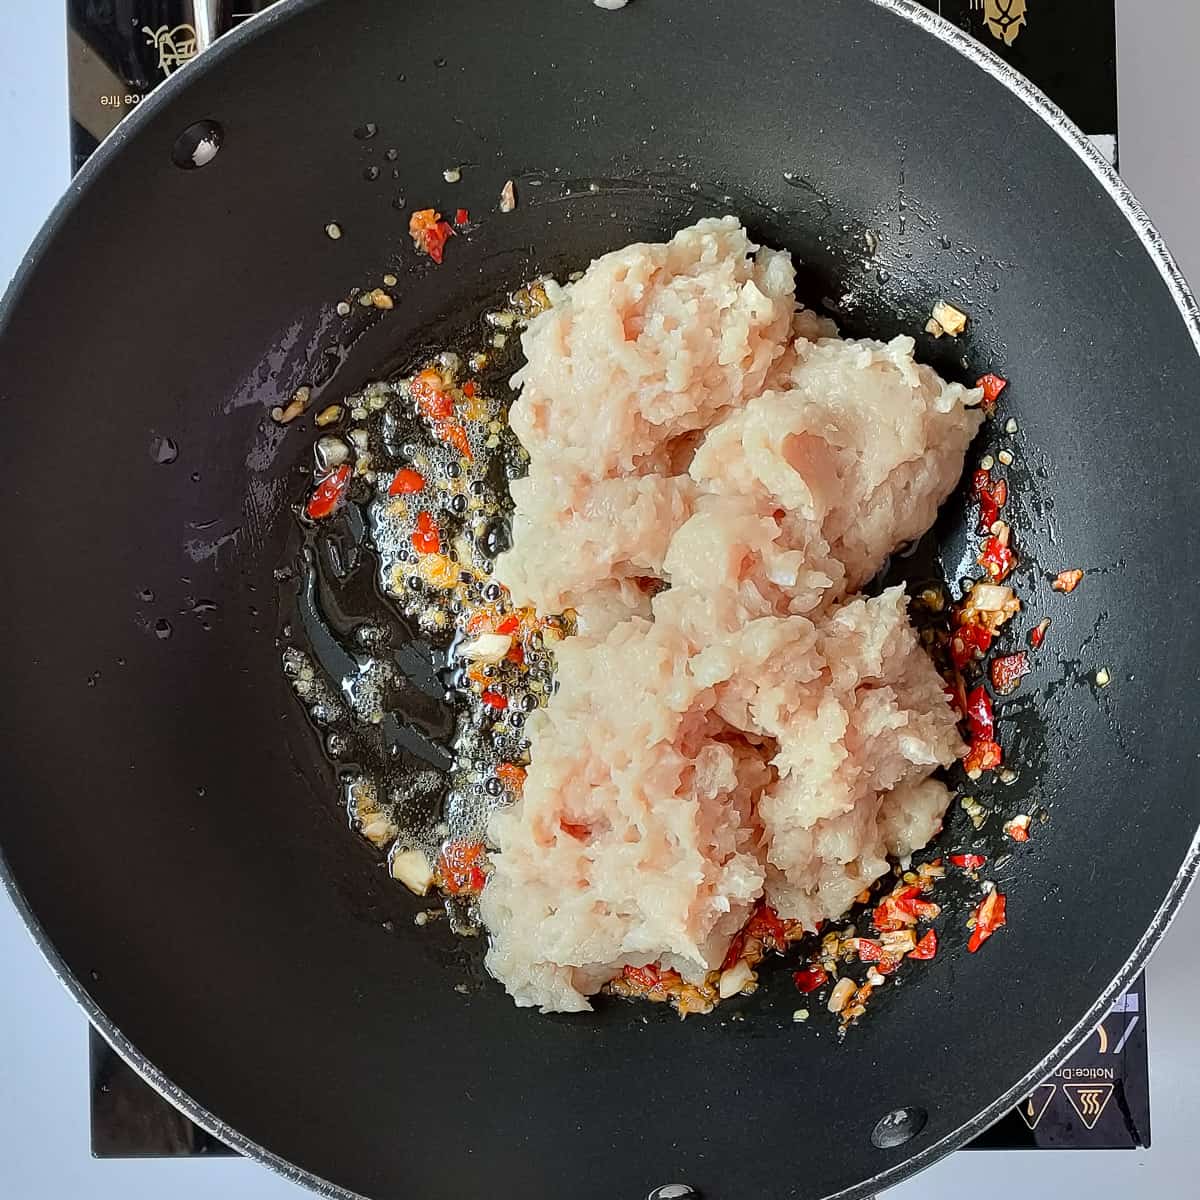 Minced chicken added to chili garlic paste in a wok.